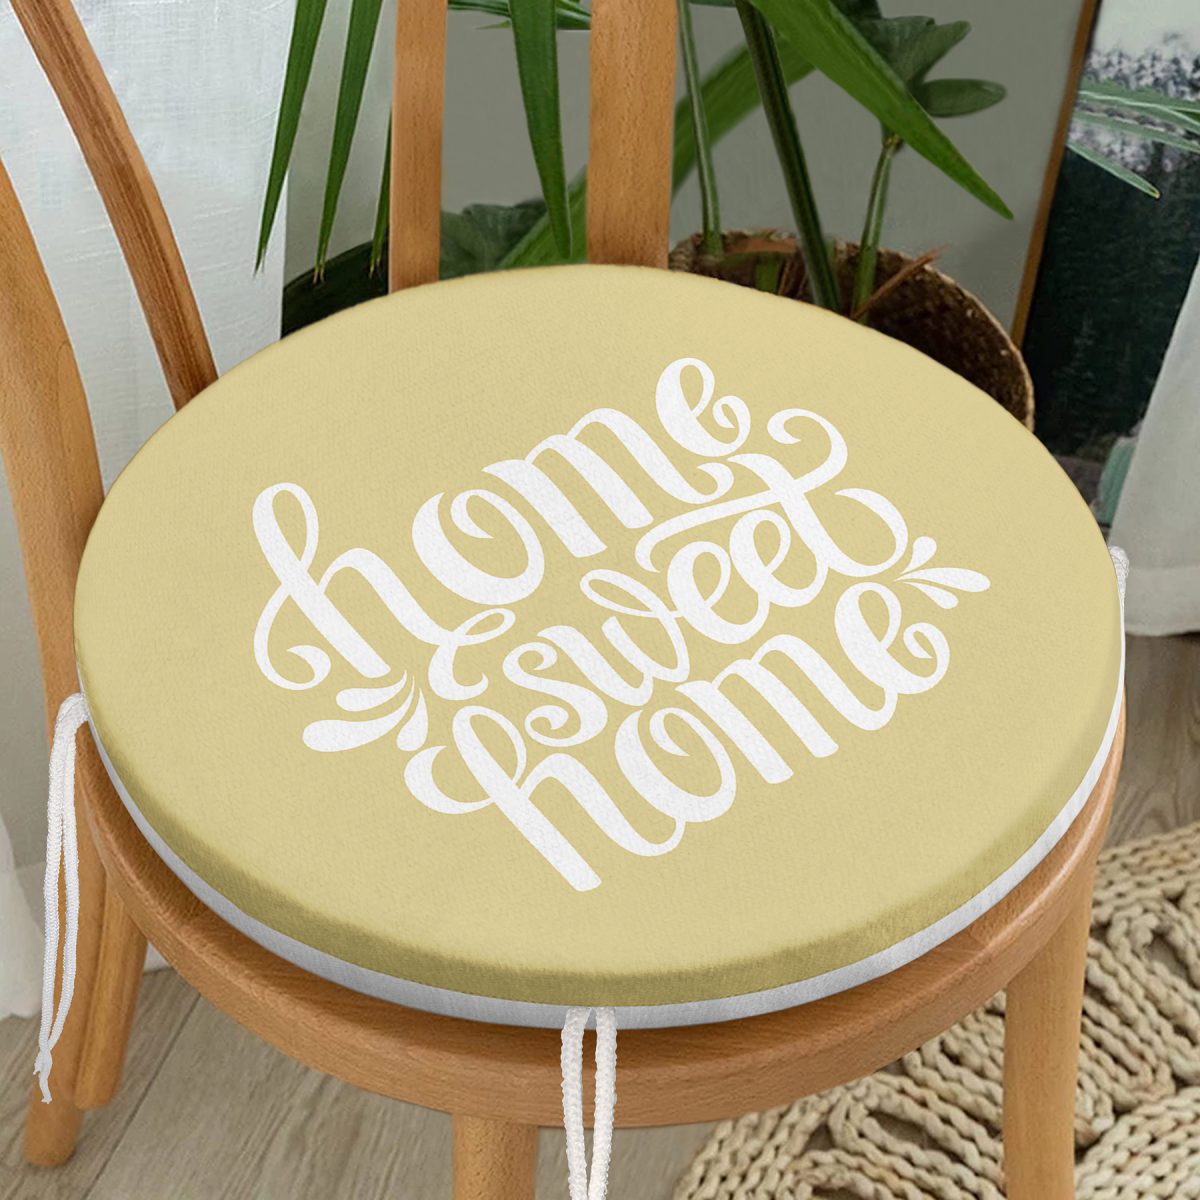 Home Sweet Home Dijital Baskılı Yuvarlak Fermuarlı Sandalye Minderi Realhomes